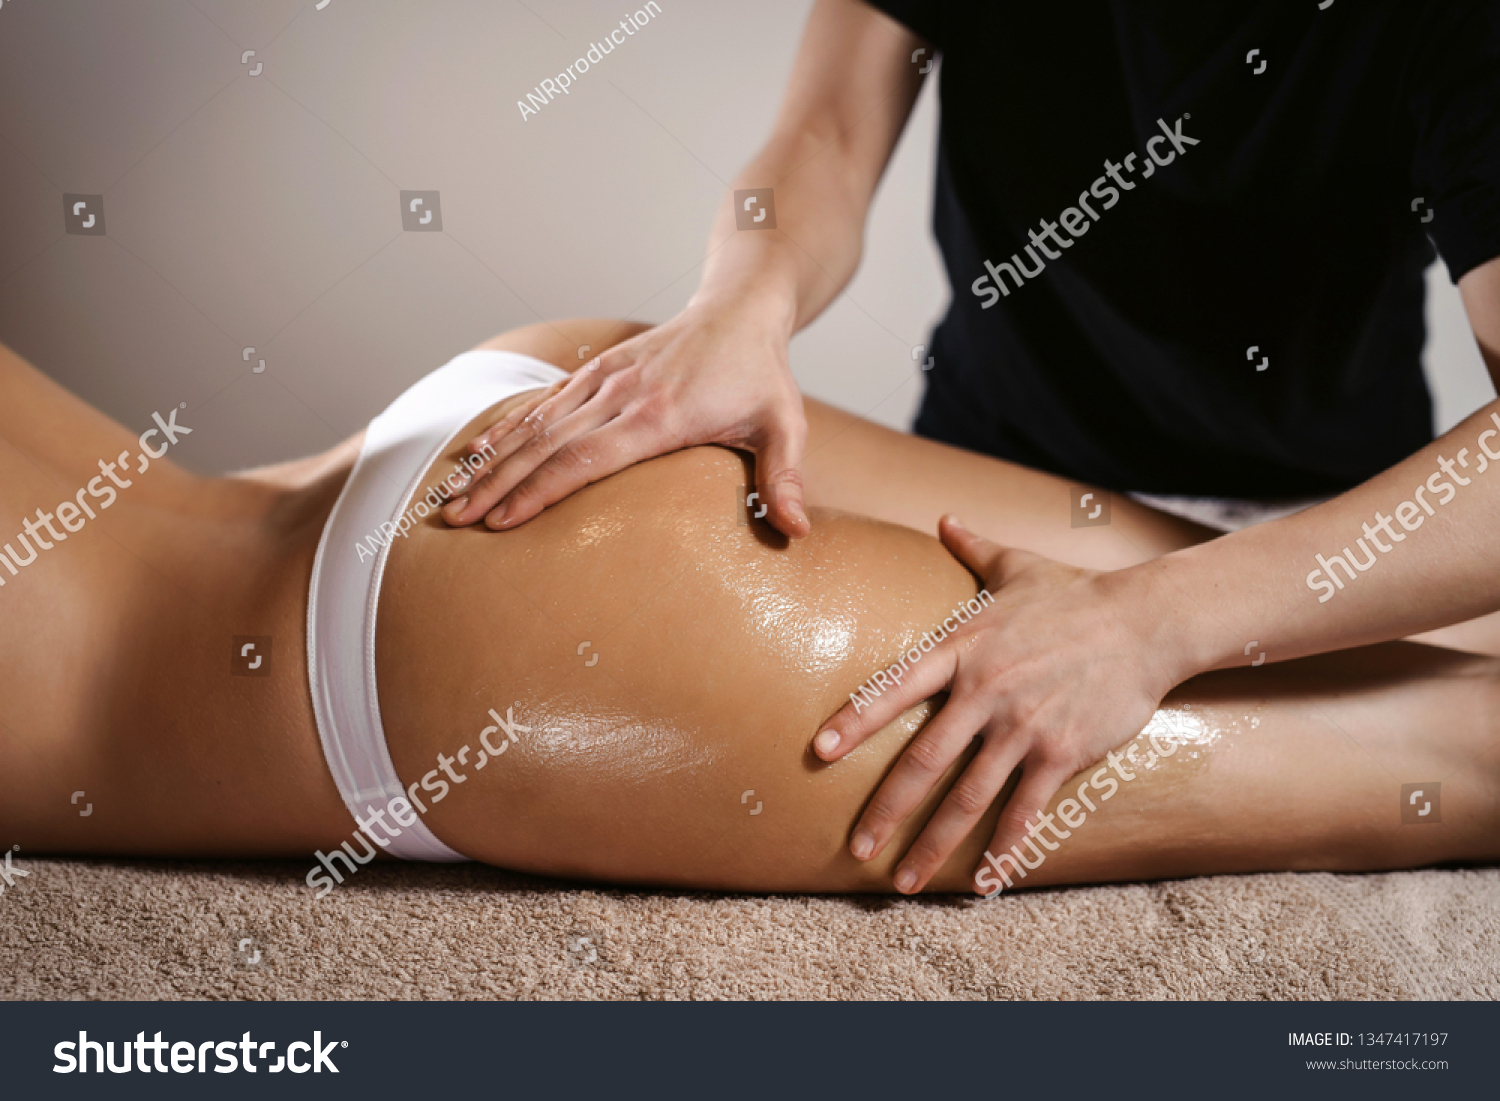 Sexy oil massage